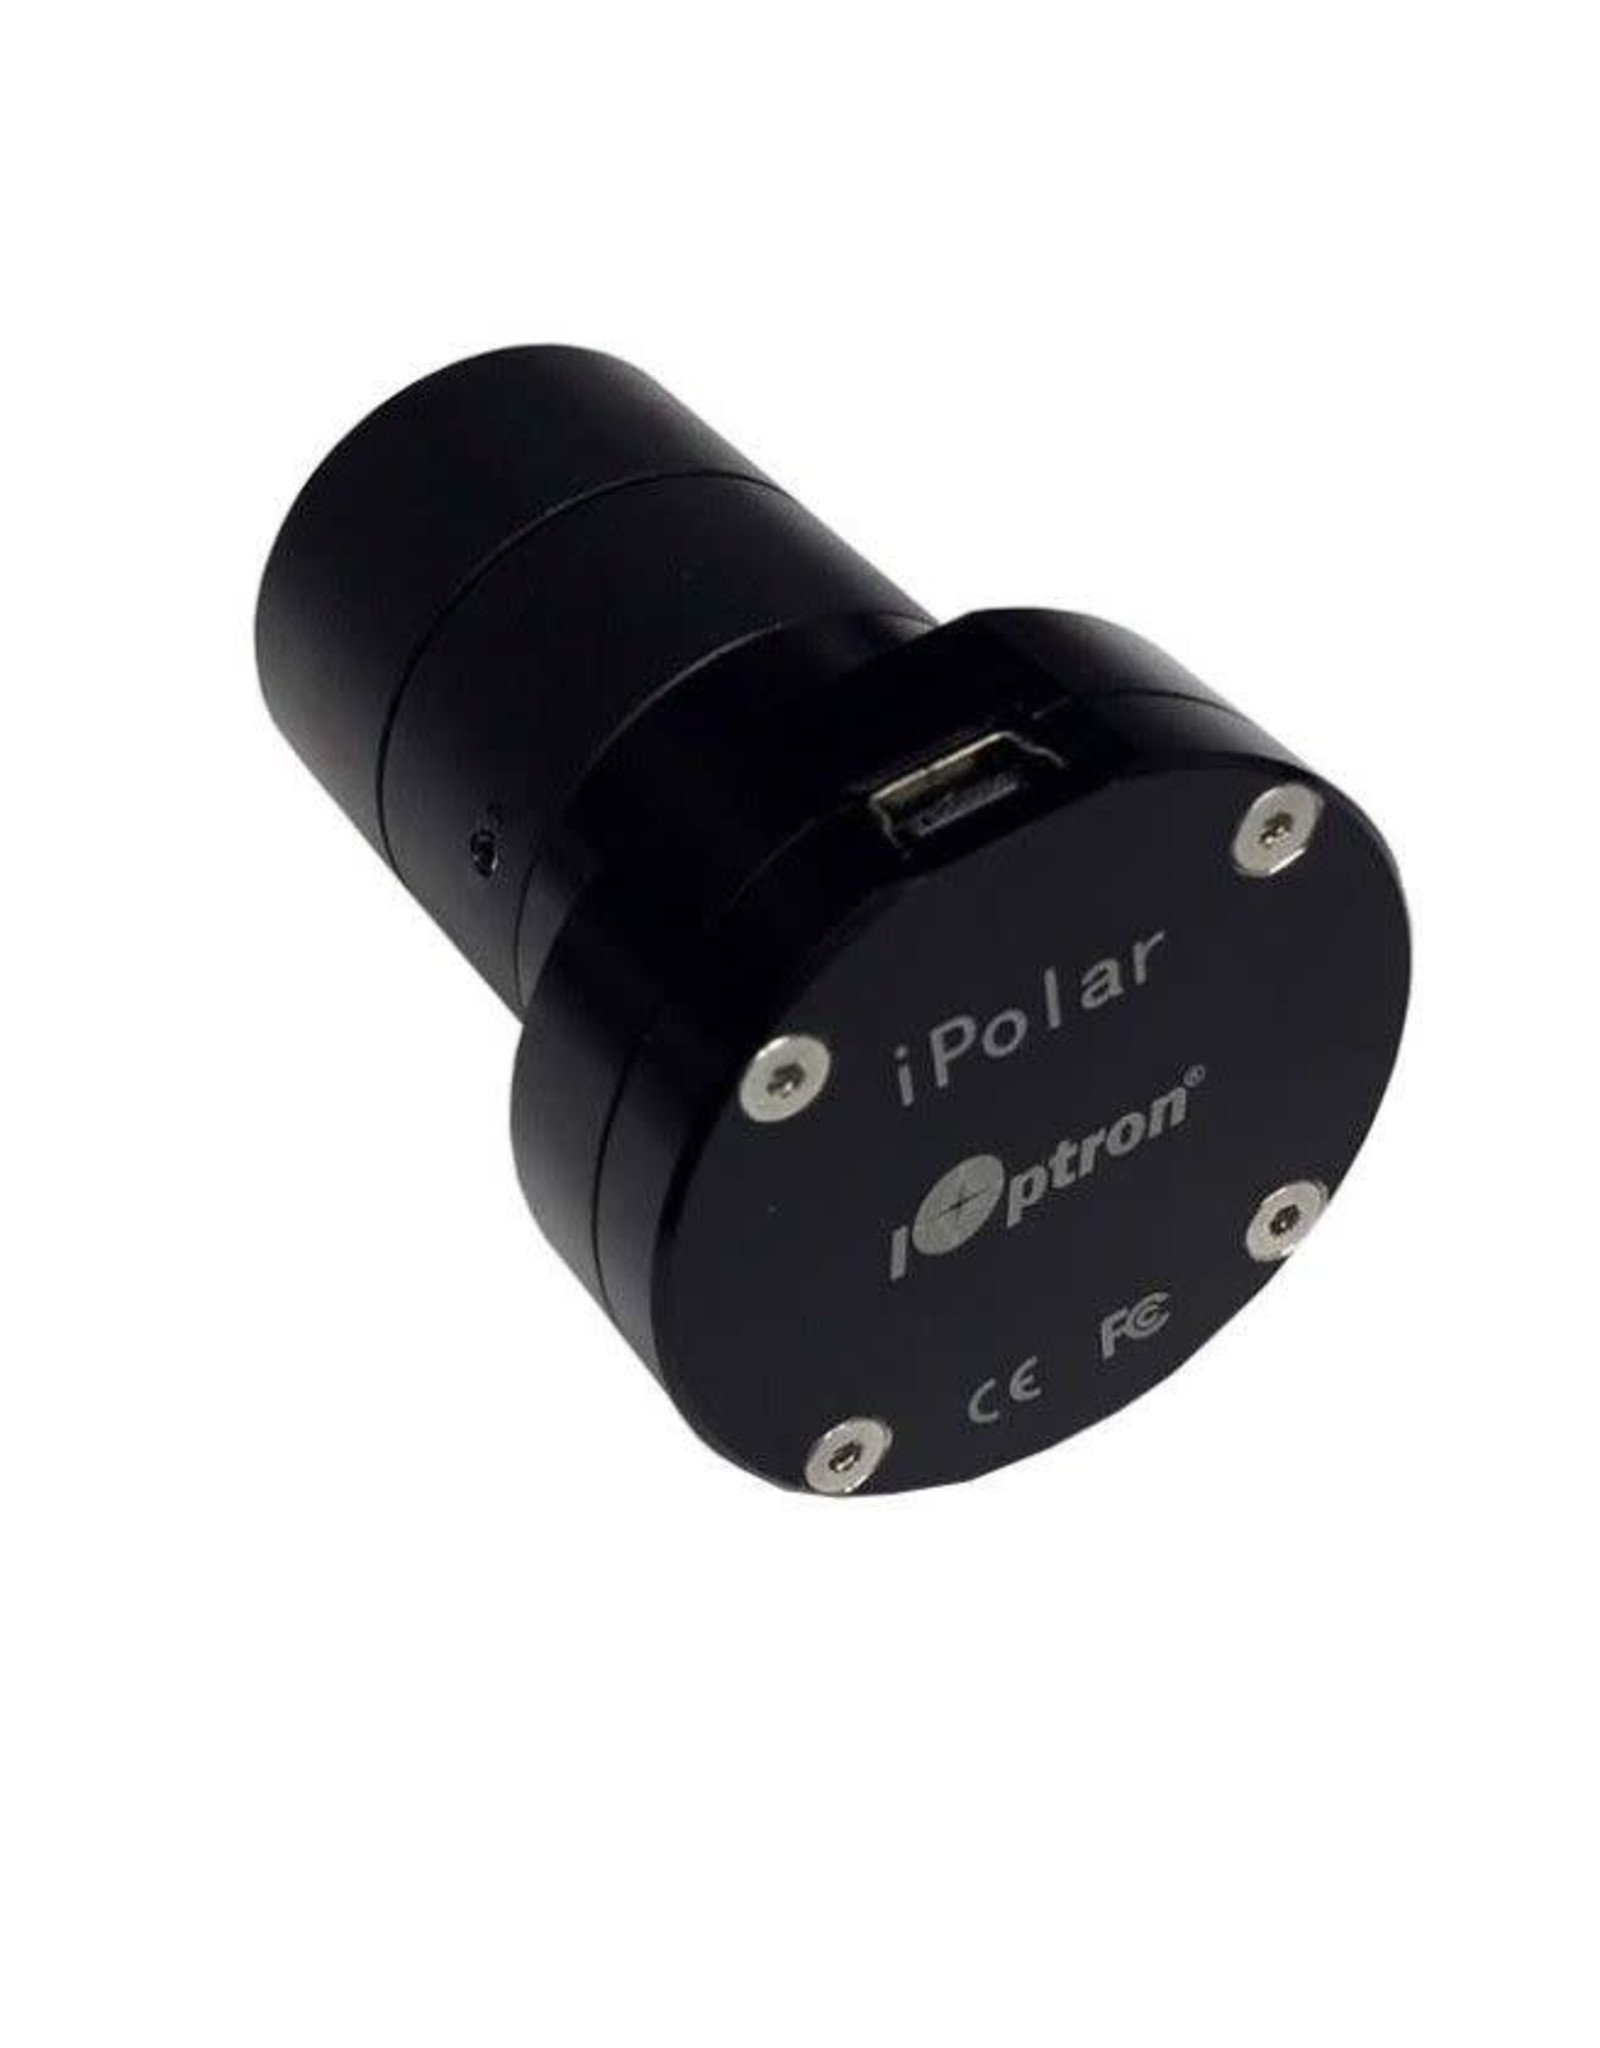 iOptron iOptron iPolar Electronic Polarscope with Adapter for Sky-Watcher HEQ5 Mount - 3339-HEQ5